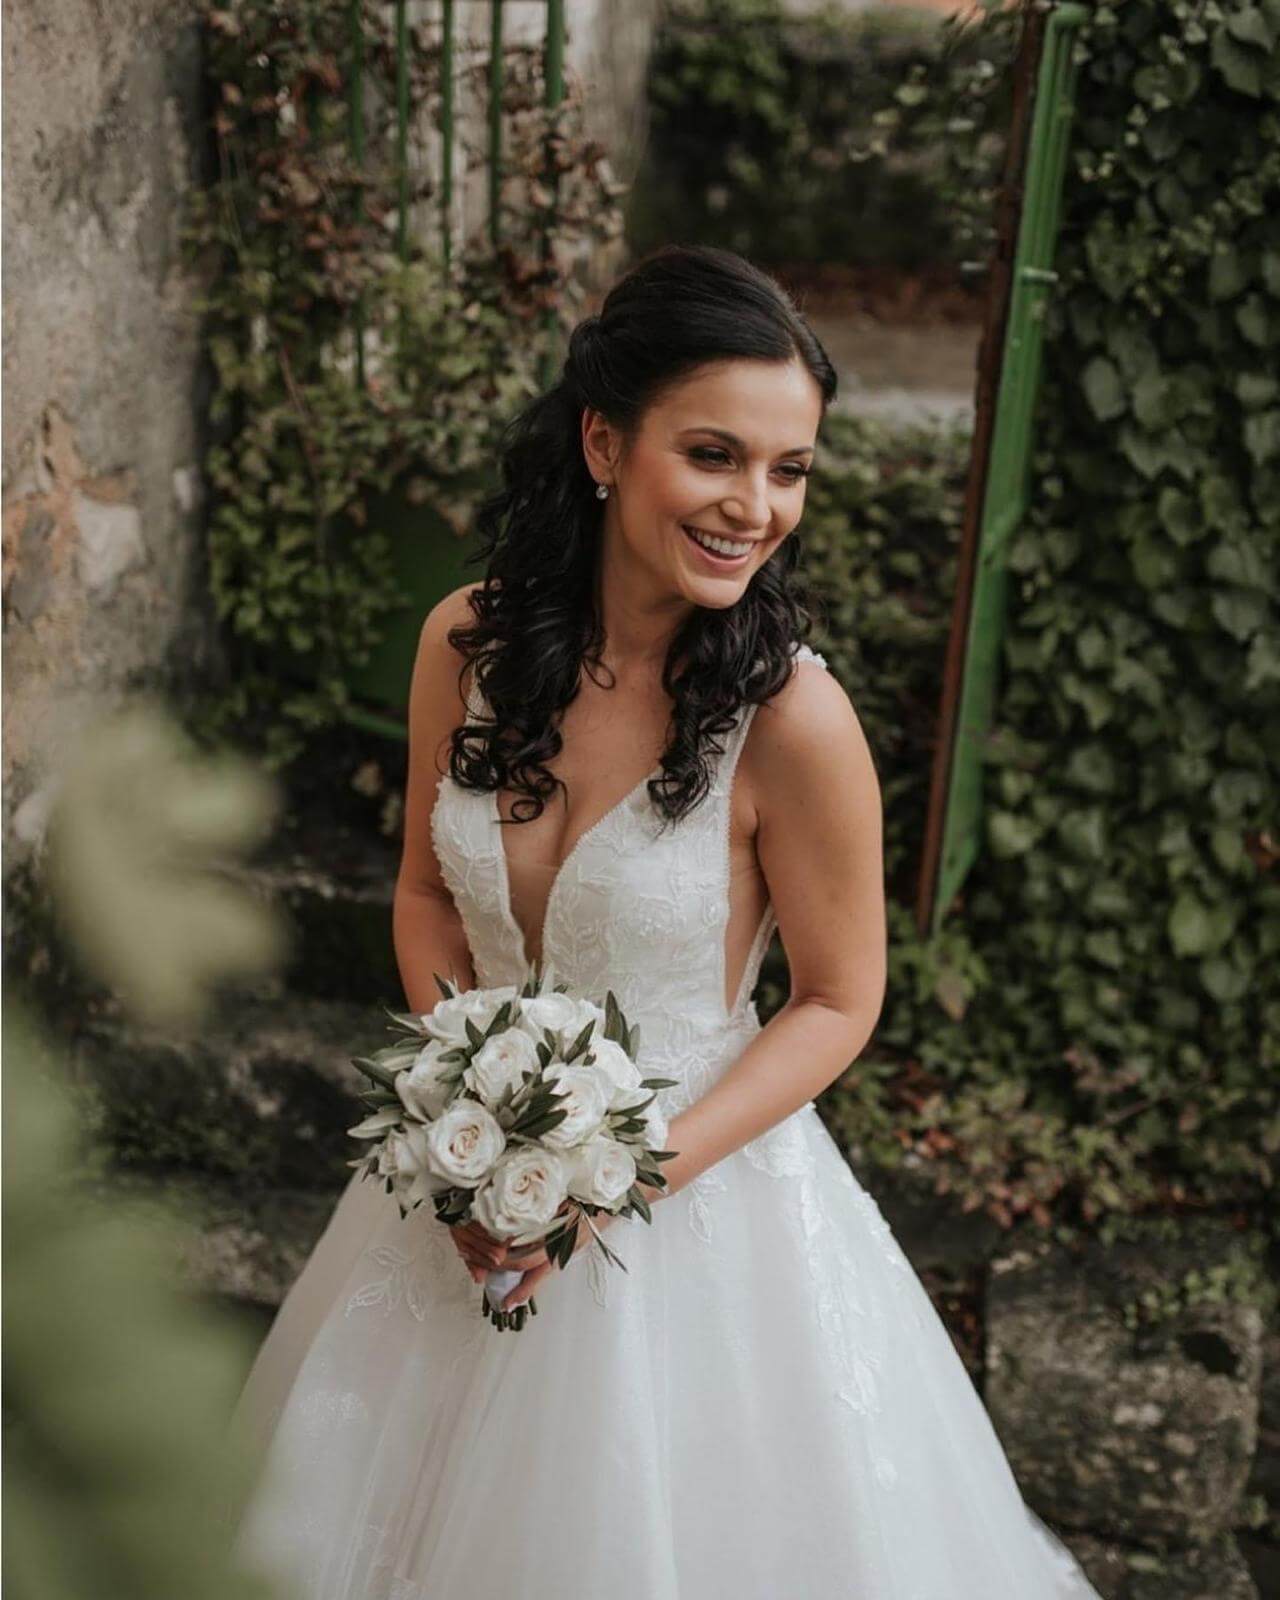 VENDOR OF THE WEEK: IVA BERISIC MAKE UP • Destination Weddings Croatia